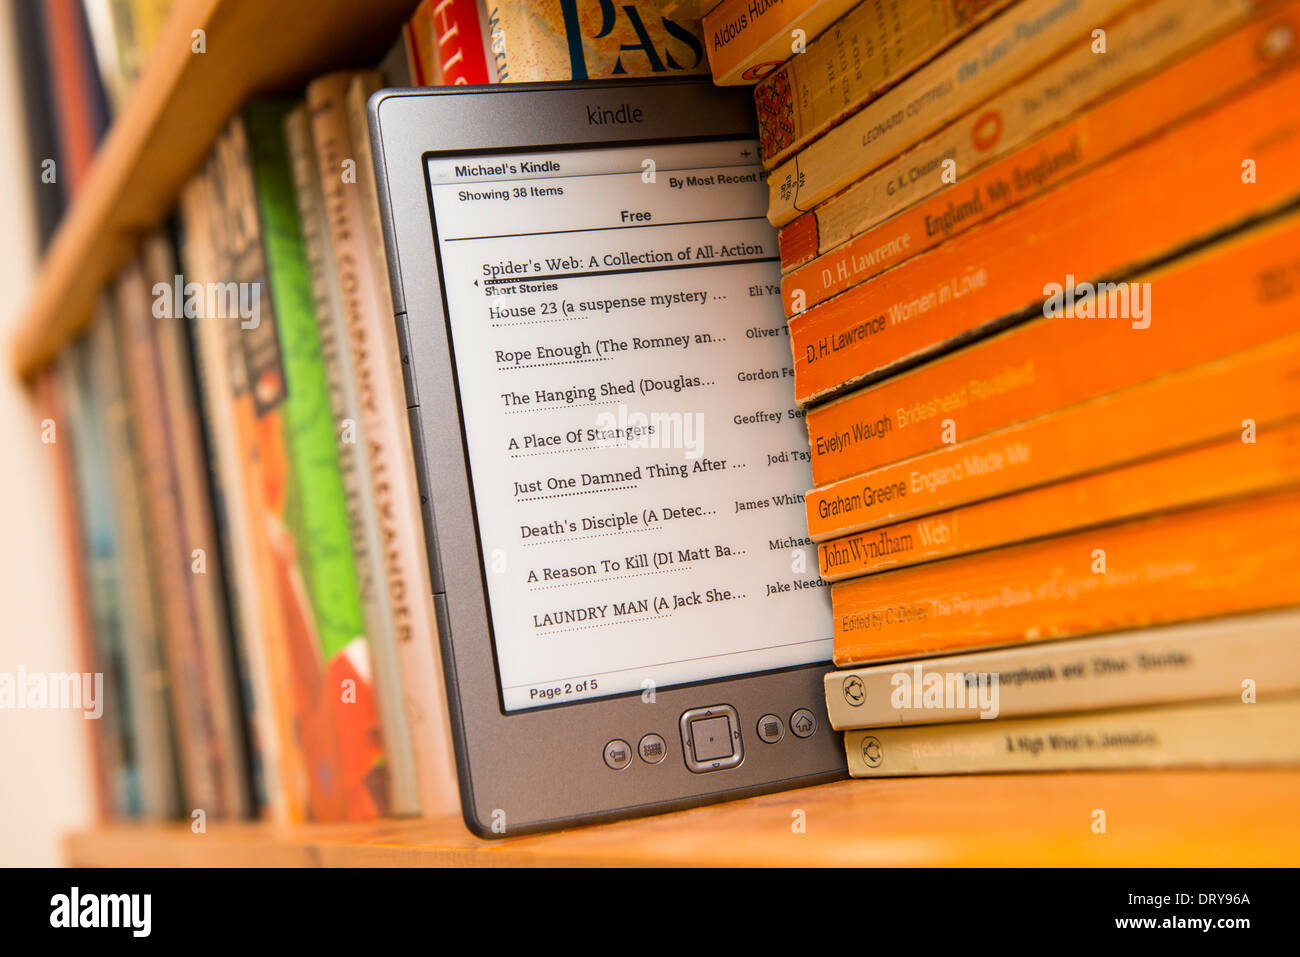 An Amazon Kindle In A Bookshelf Stock Photo 66368130 Alamy